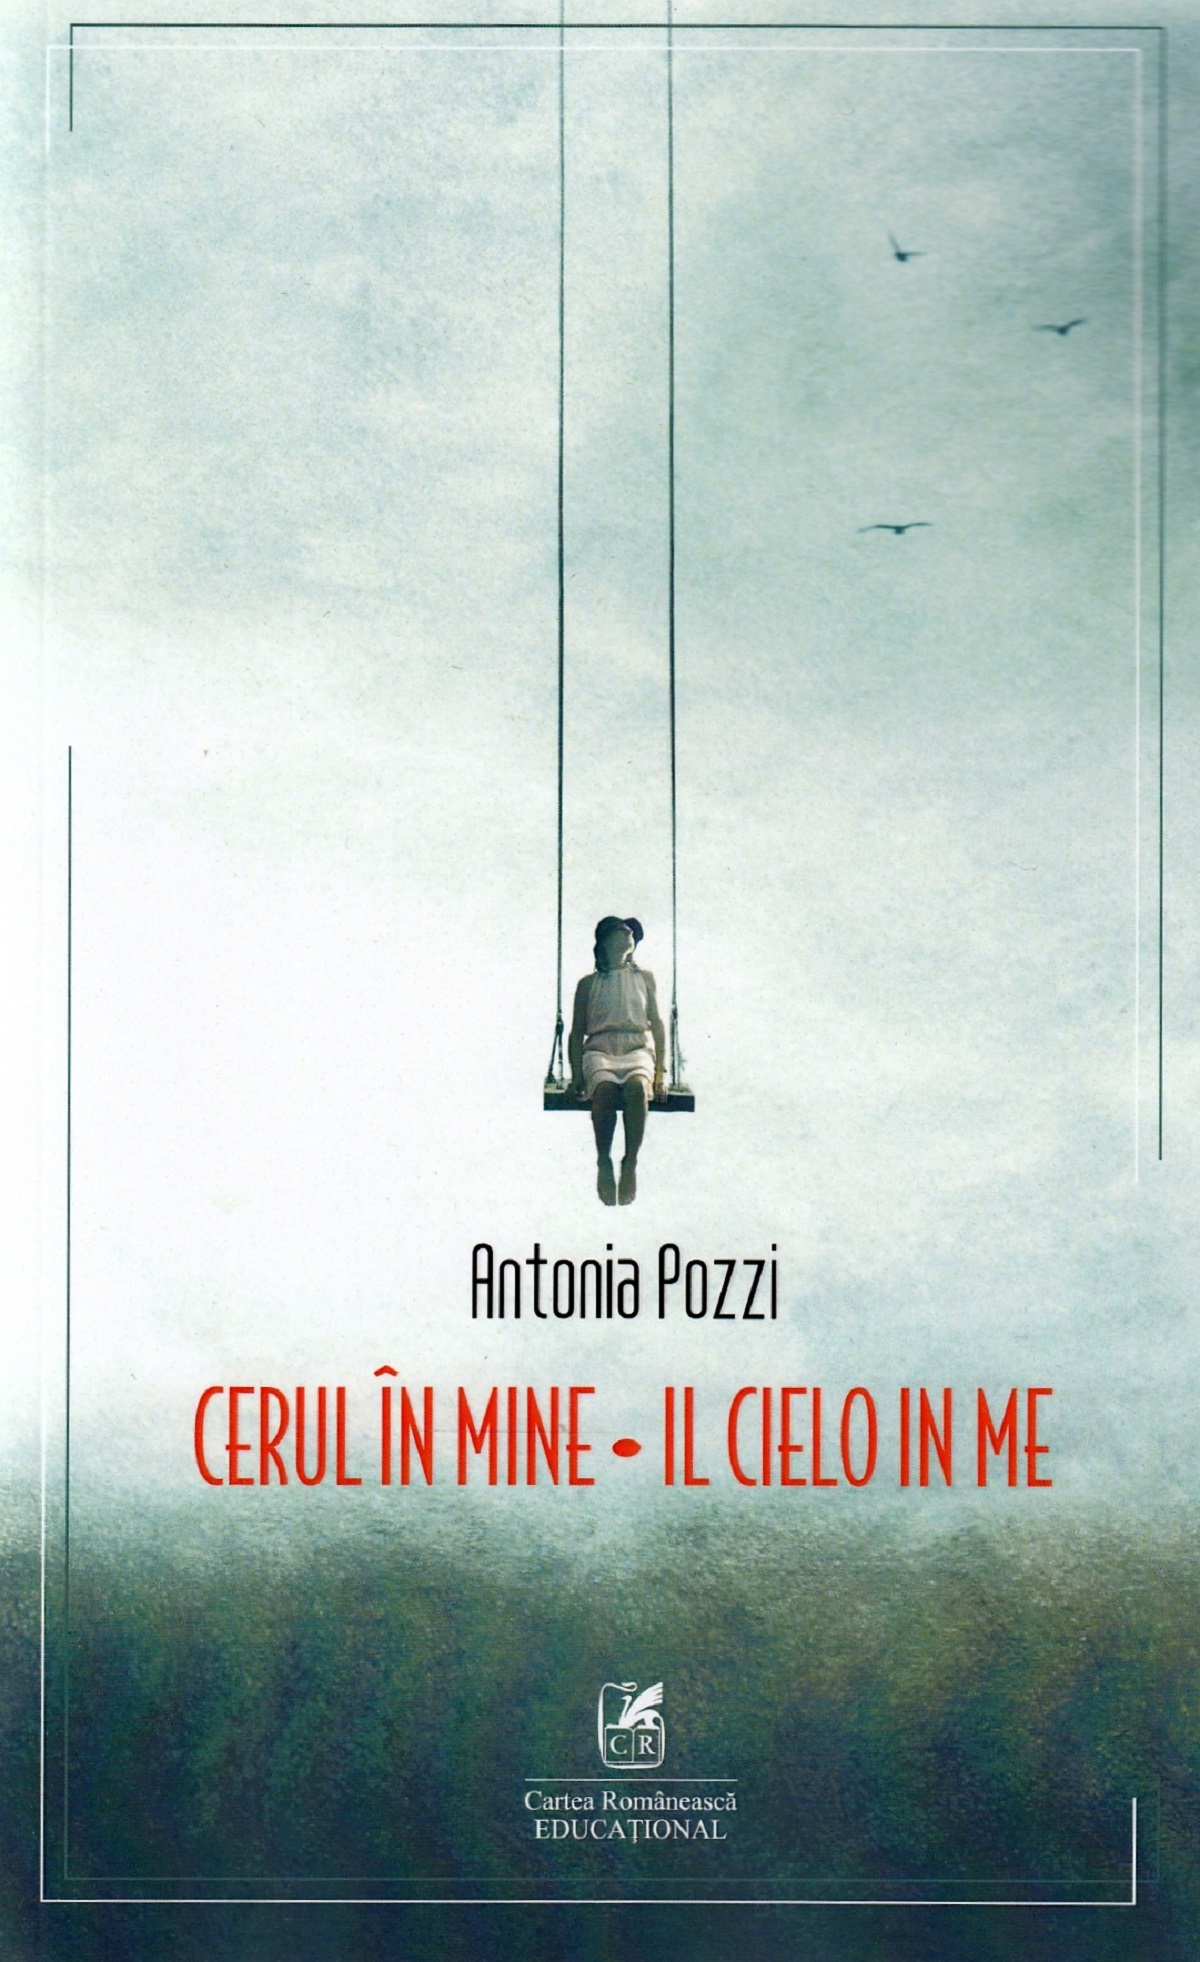 Cerul in mine | Antonia Pozzi Cartea Romaneasca educational poza bestsellers.ro